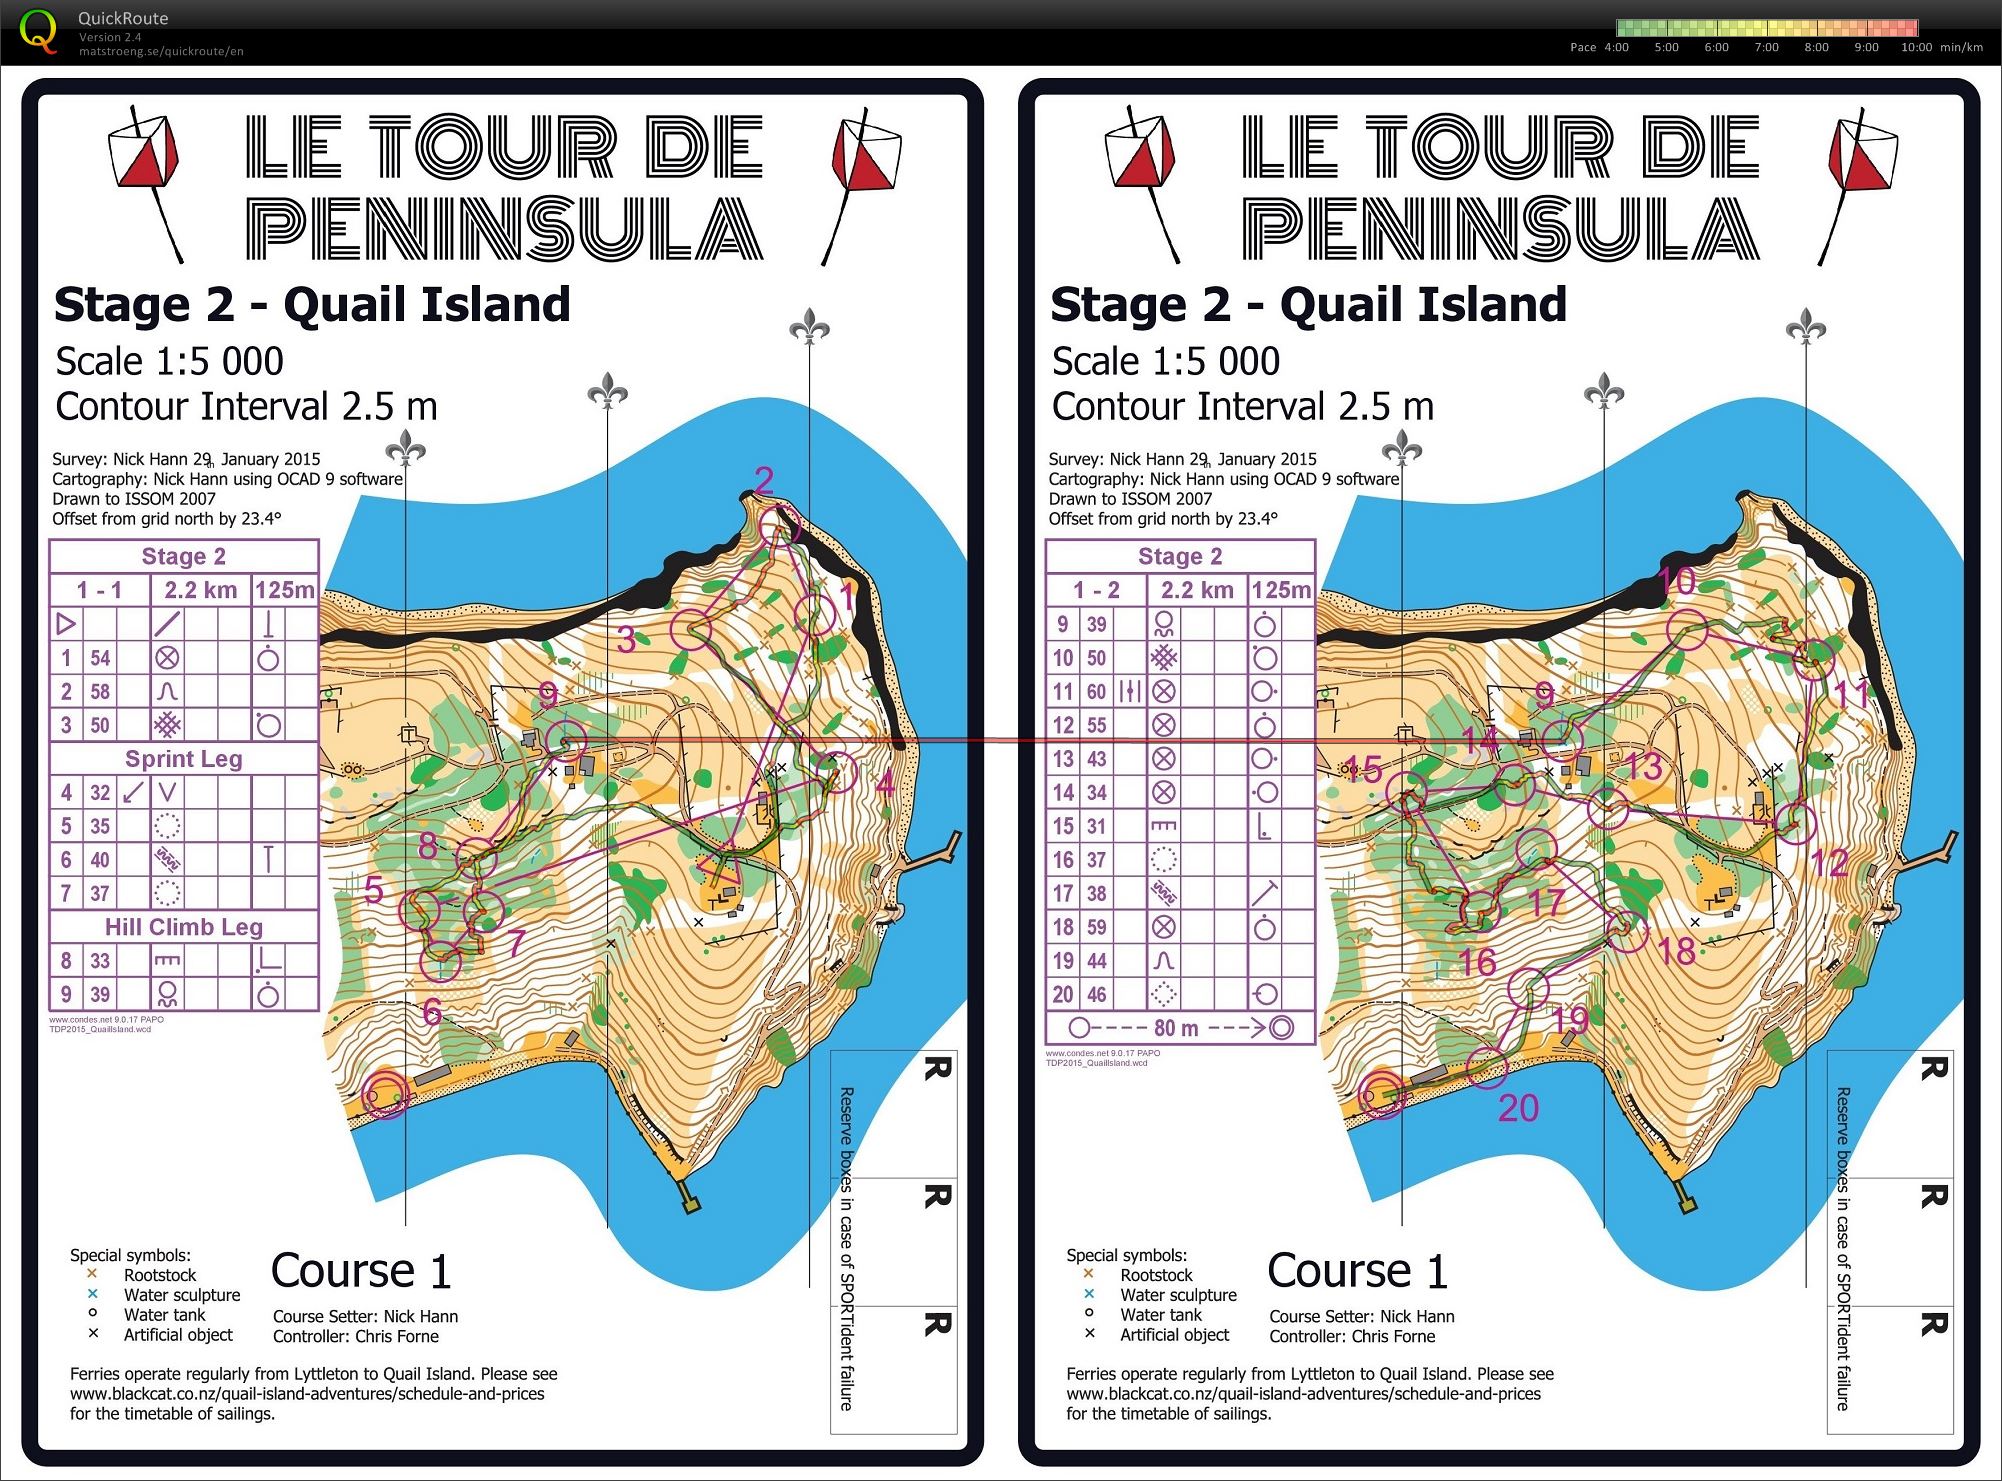 Tour De Peninsula Stage 2 (06/02/2015)